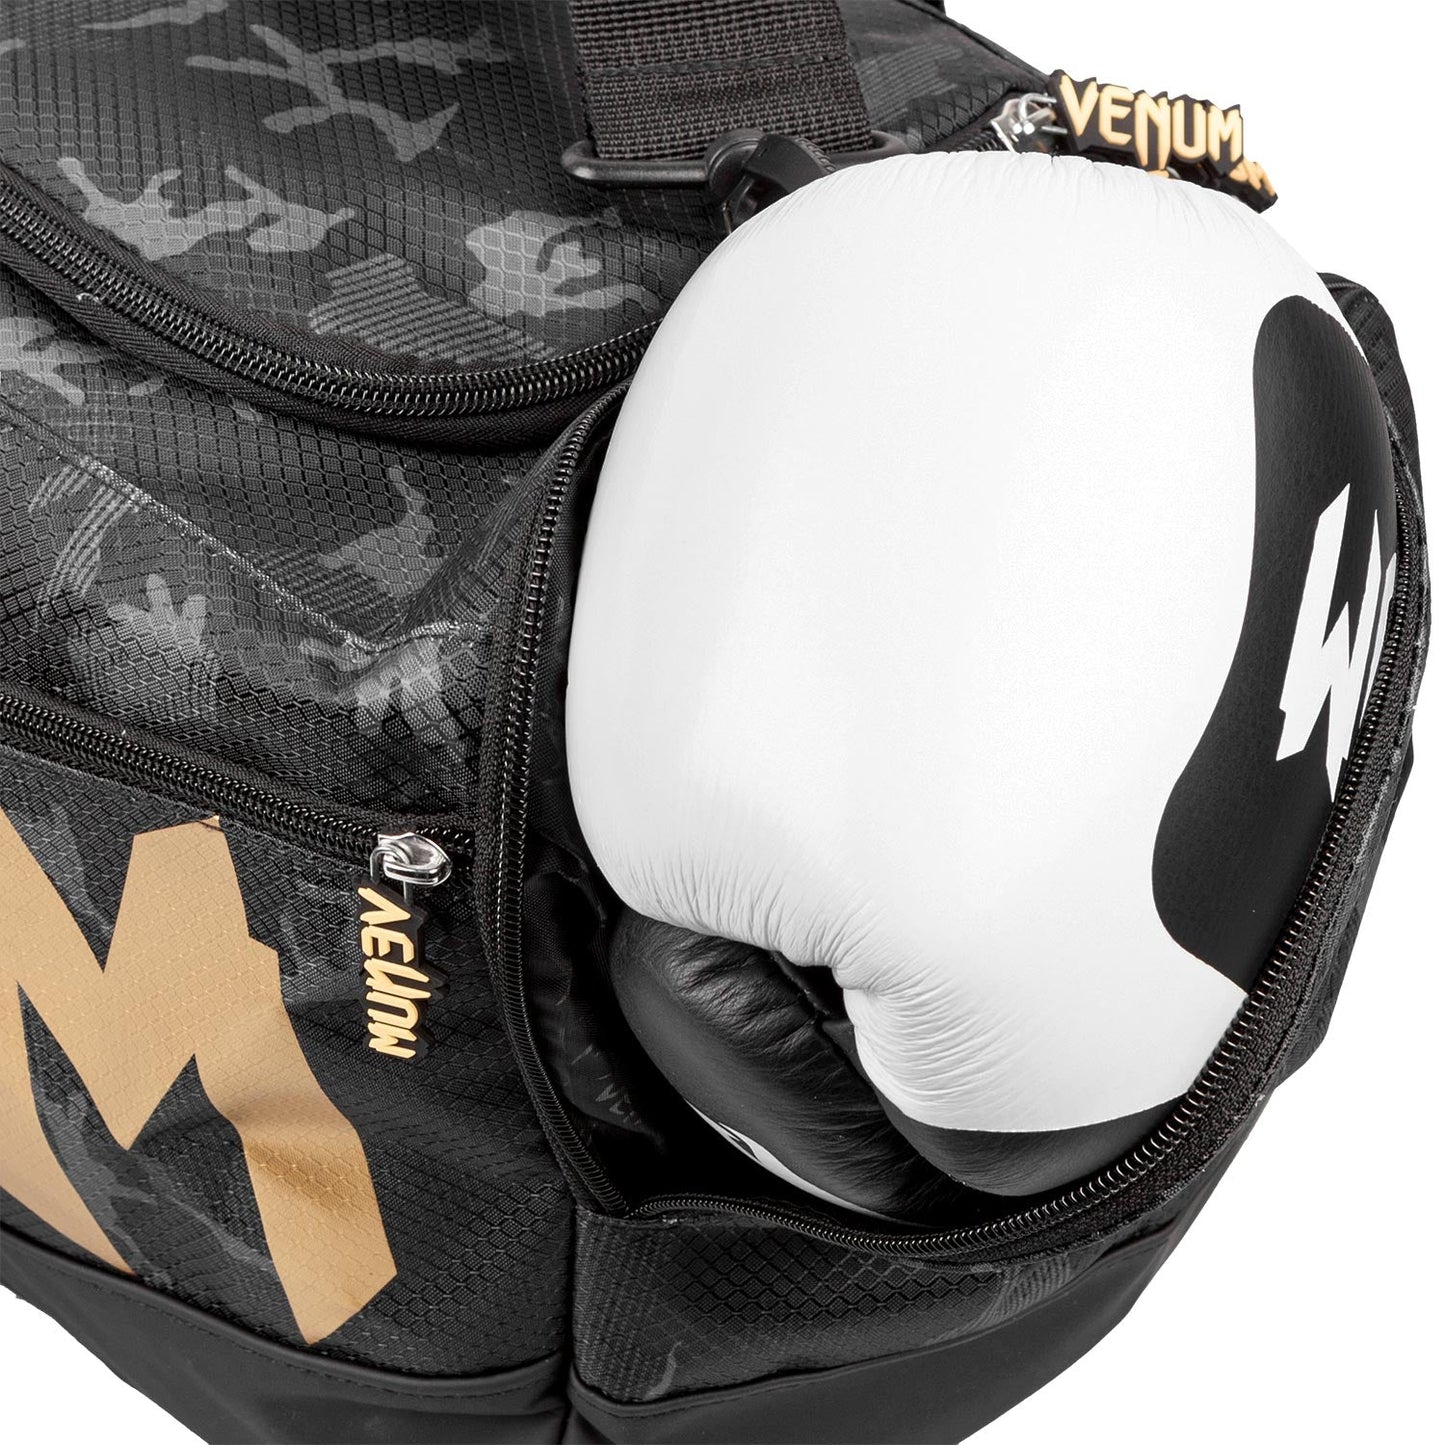 Venum Sparring Sport Bag